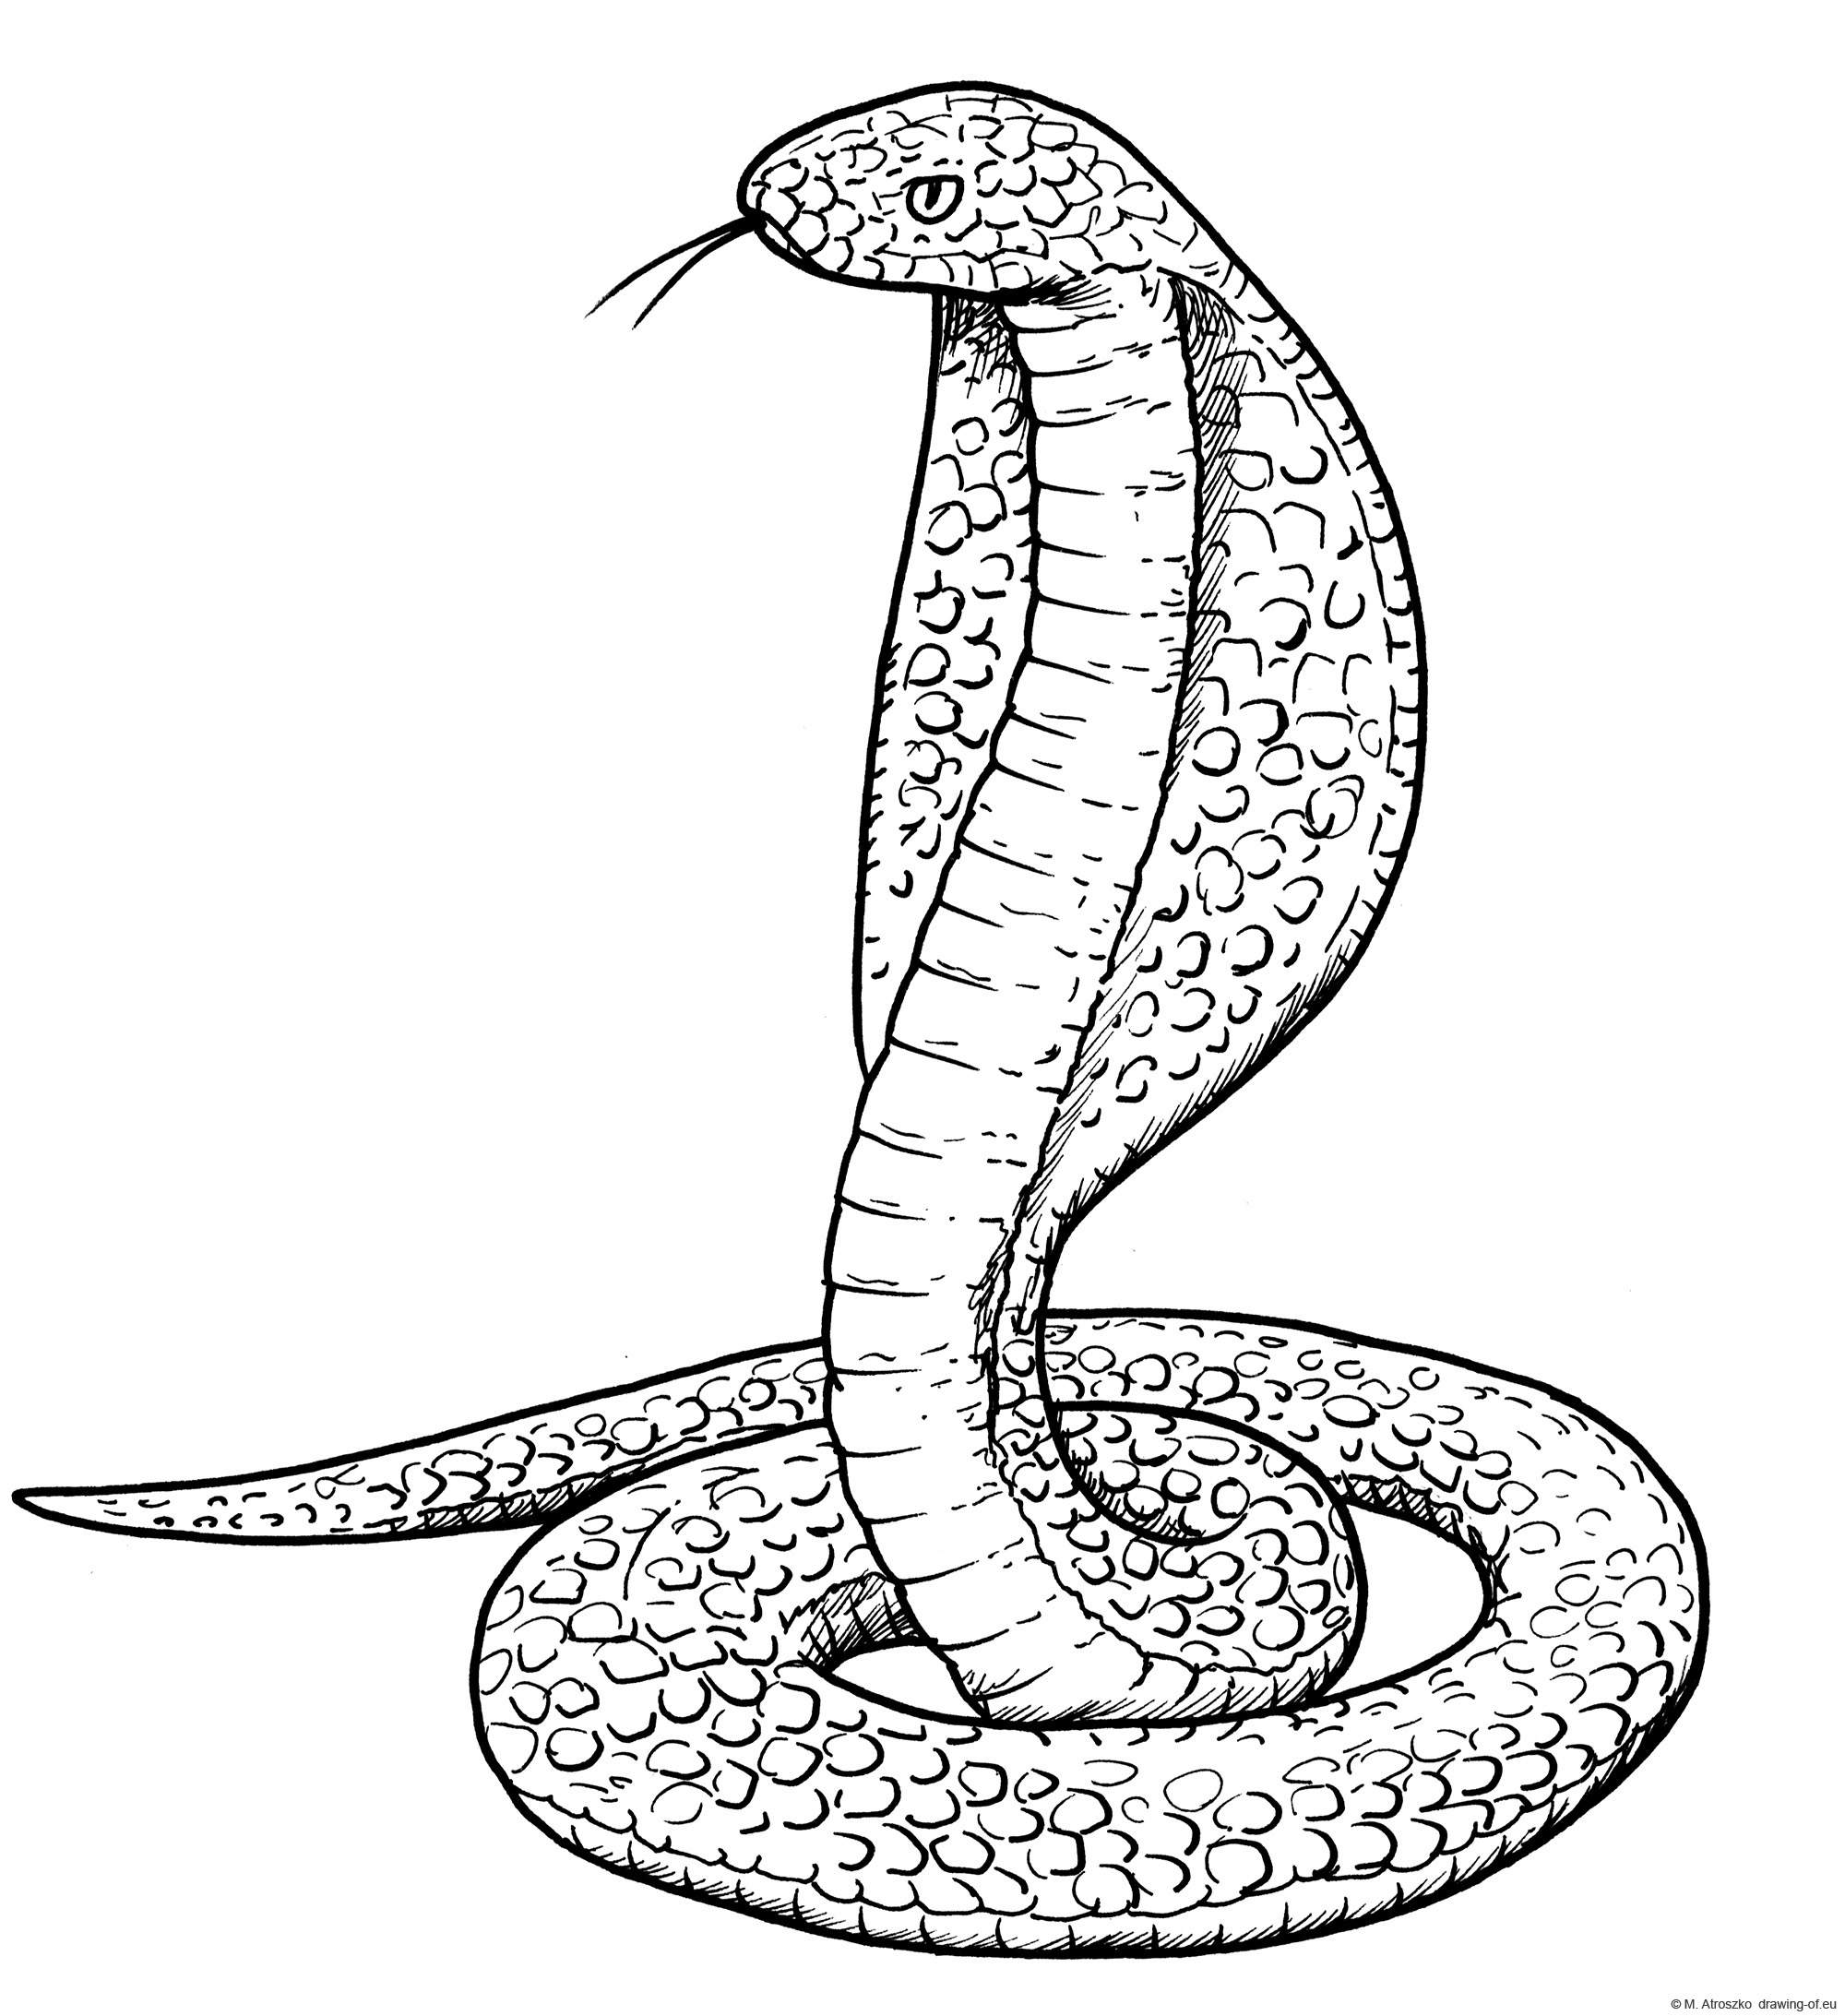 Cobra snake drawing